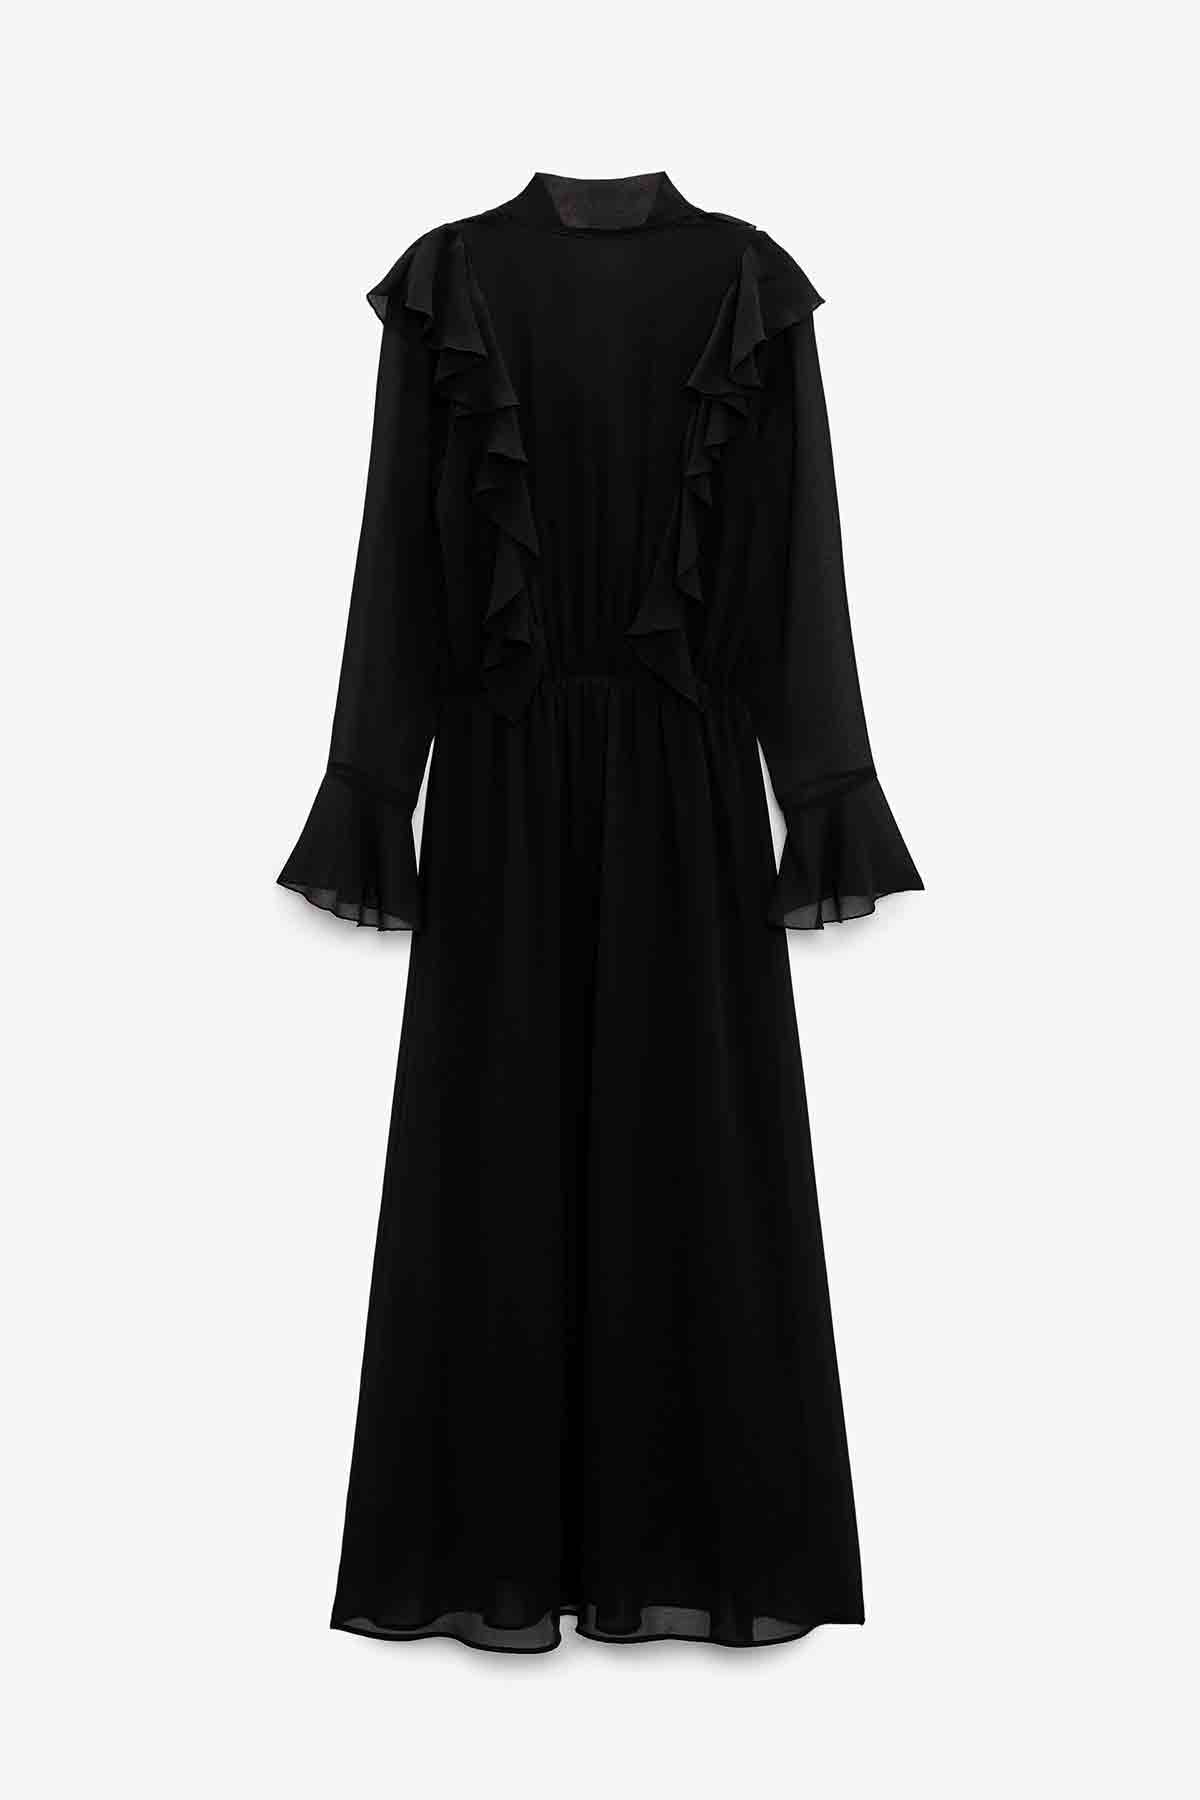 Vestido-negro-17,99-euros